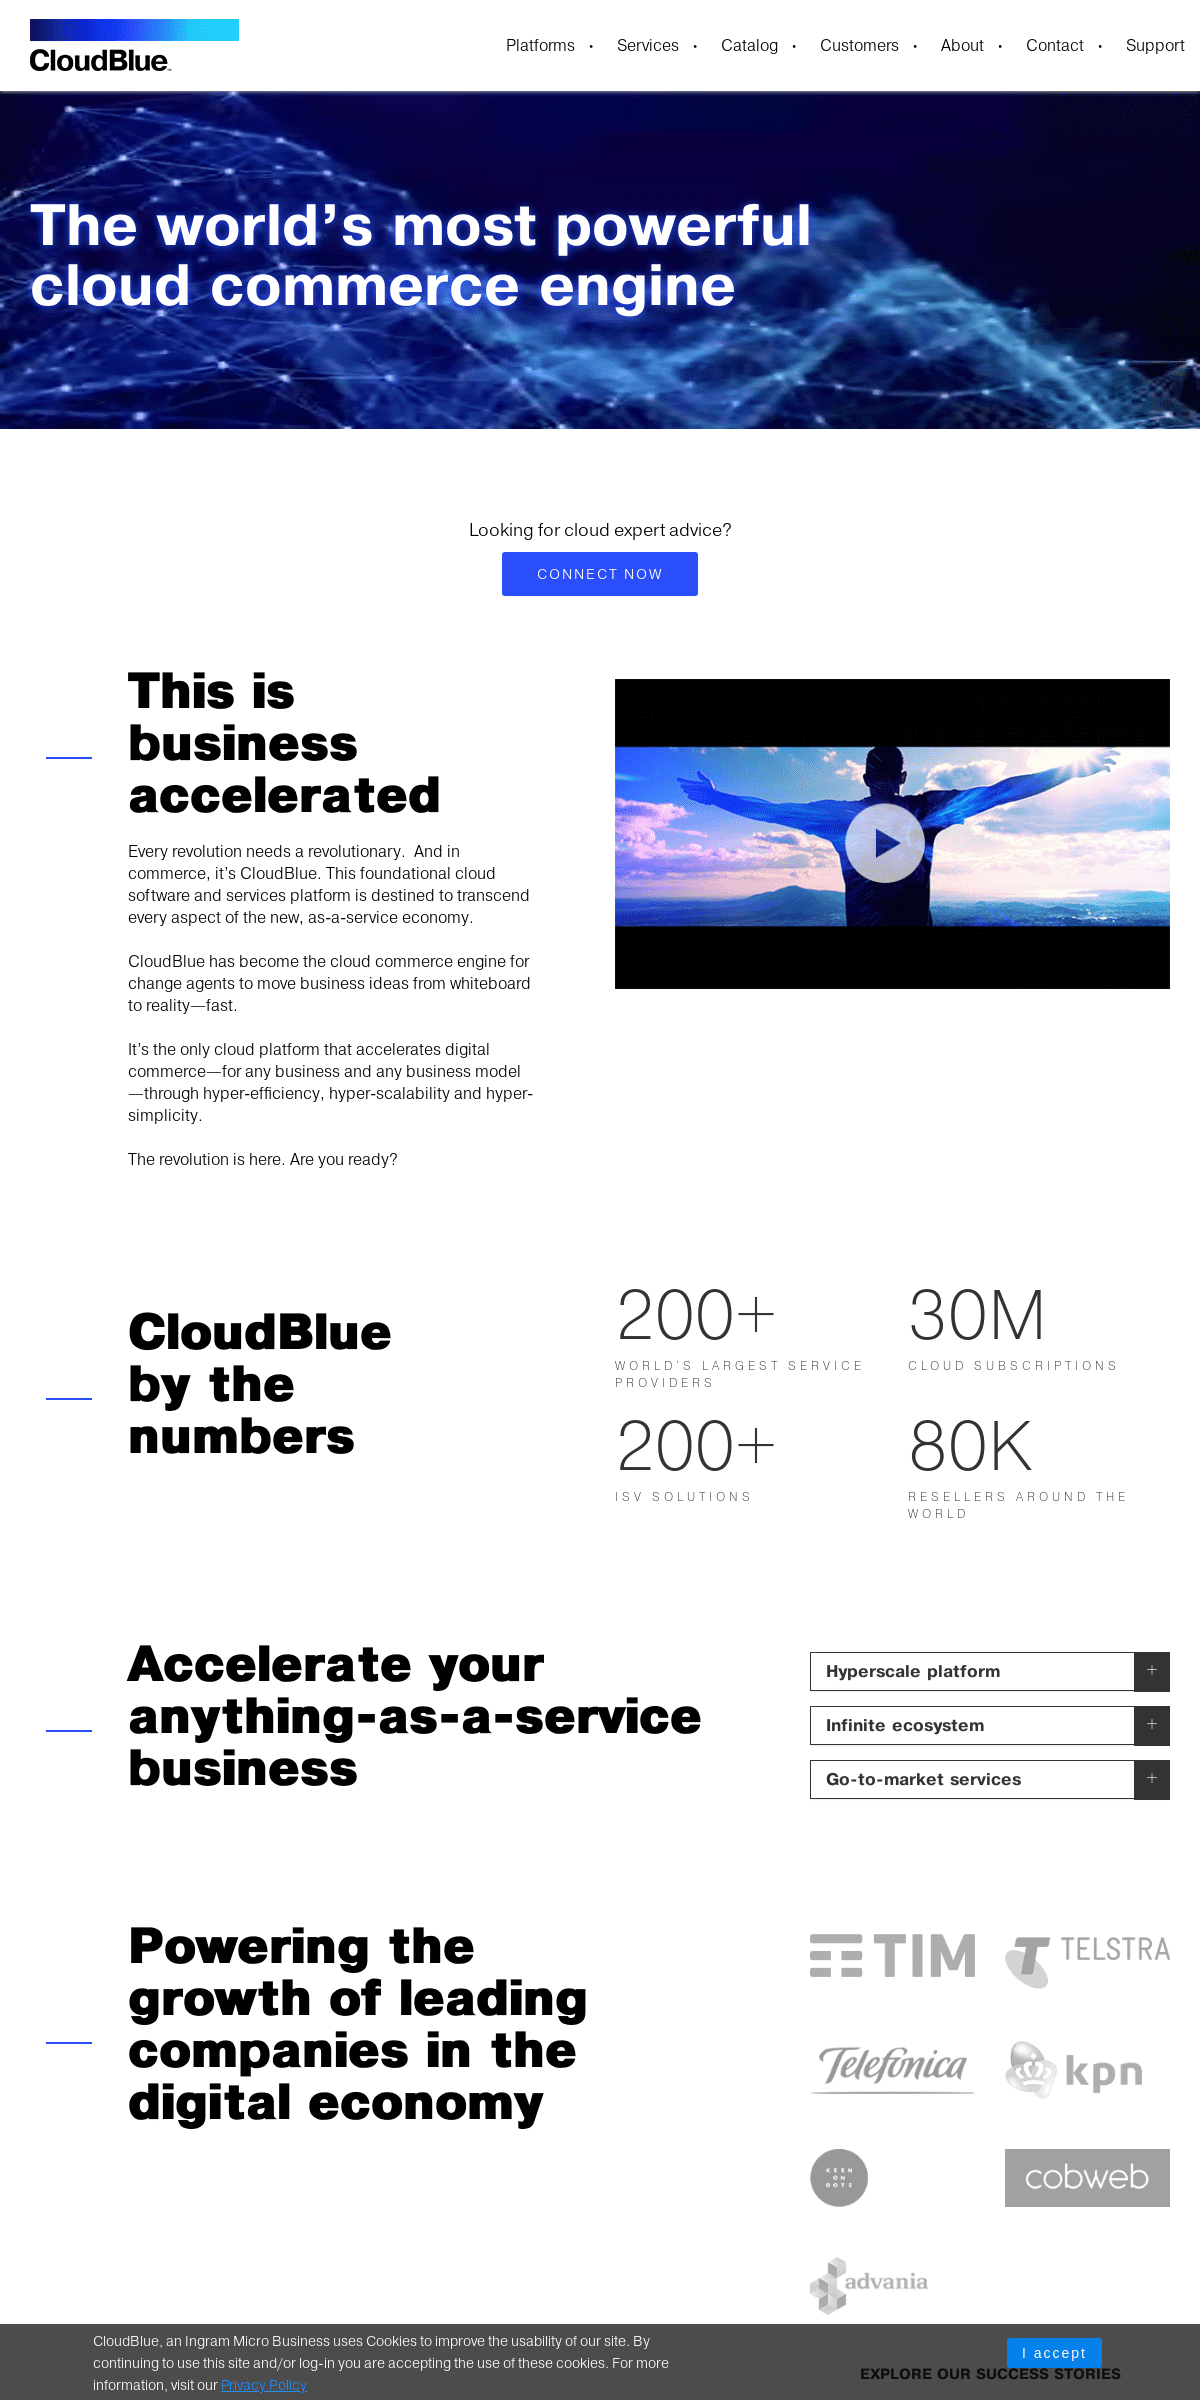 A complete backup of cloudblue.com